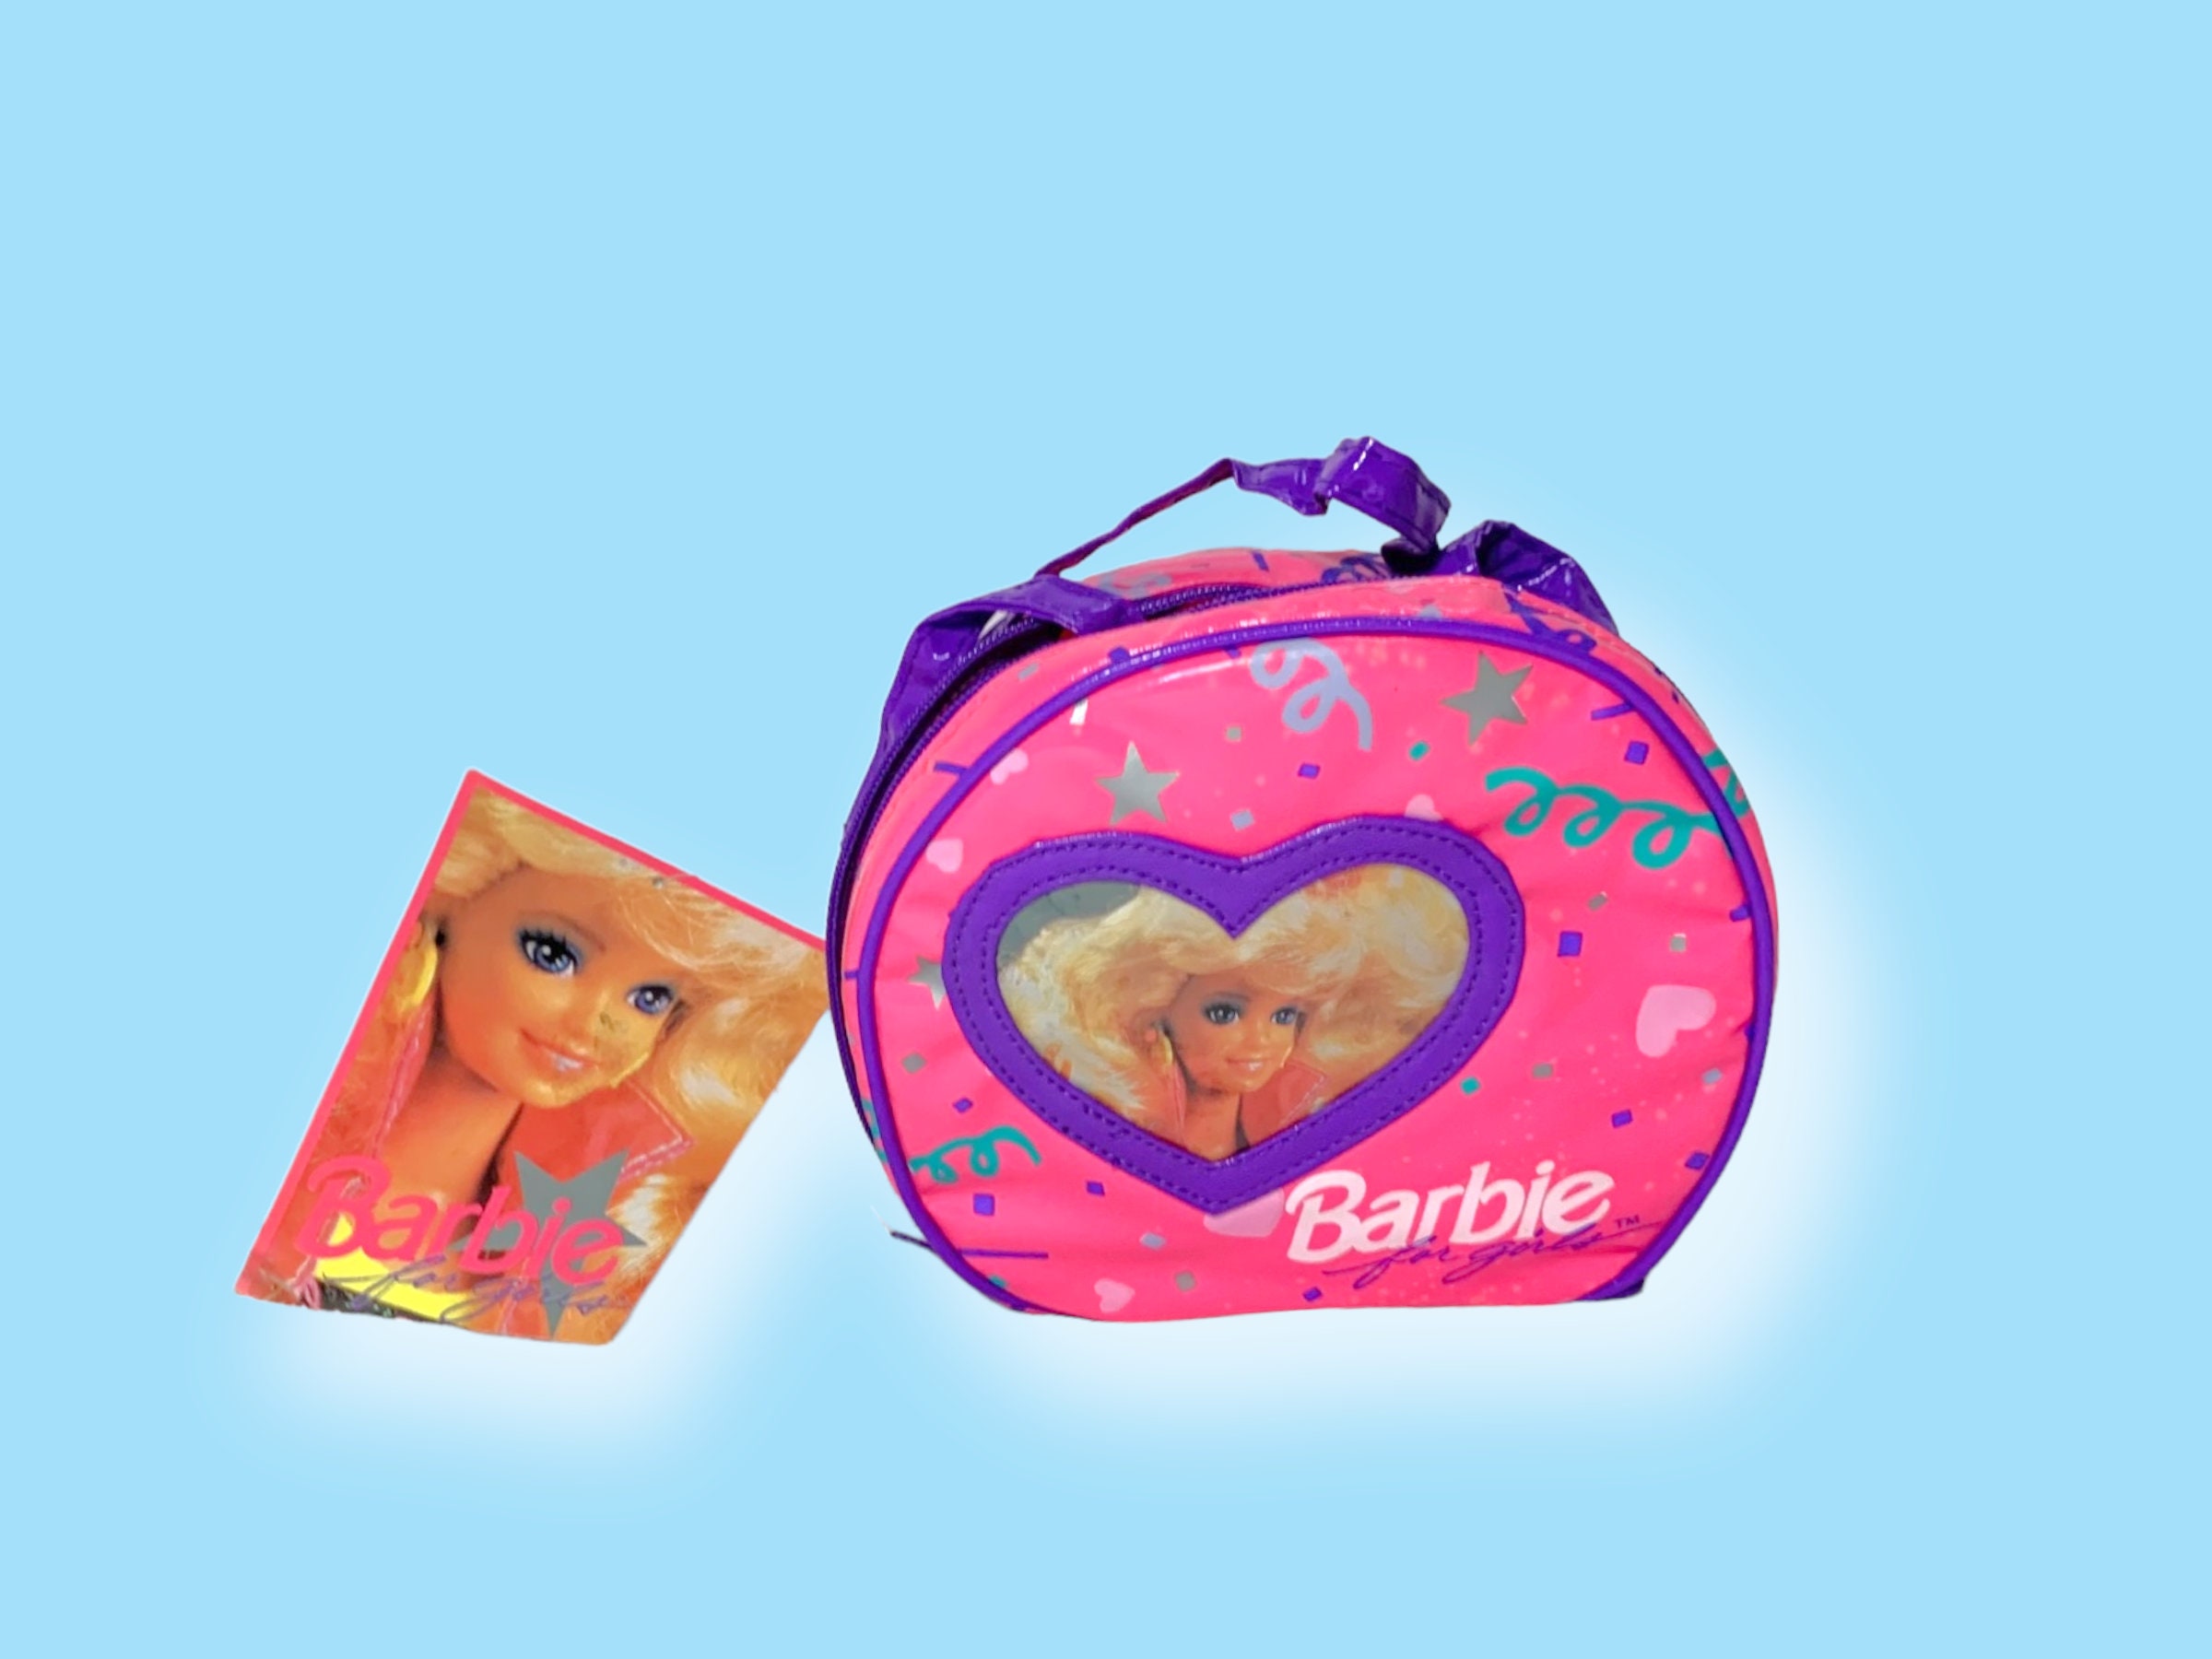 Barbie Purse - Etsy